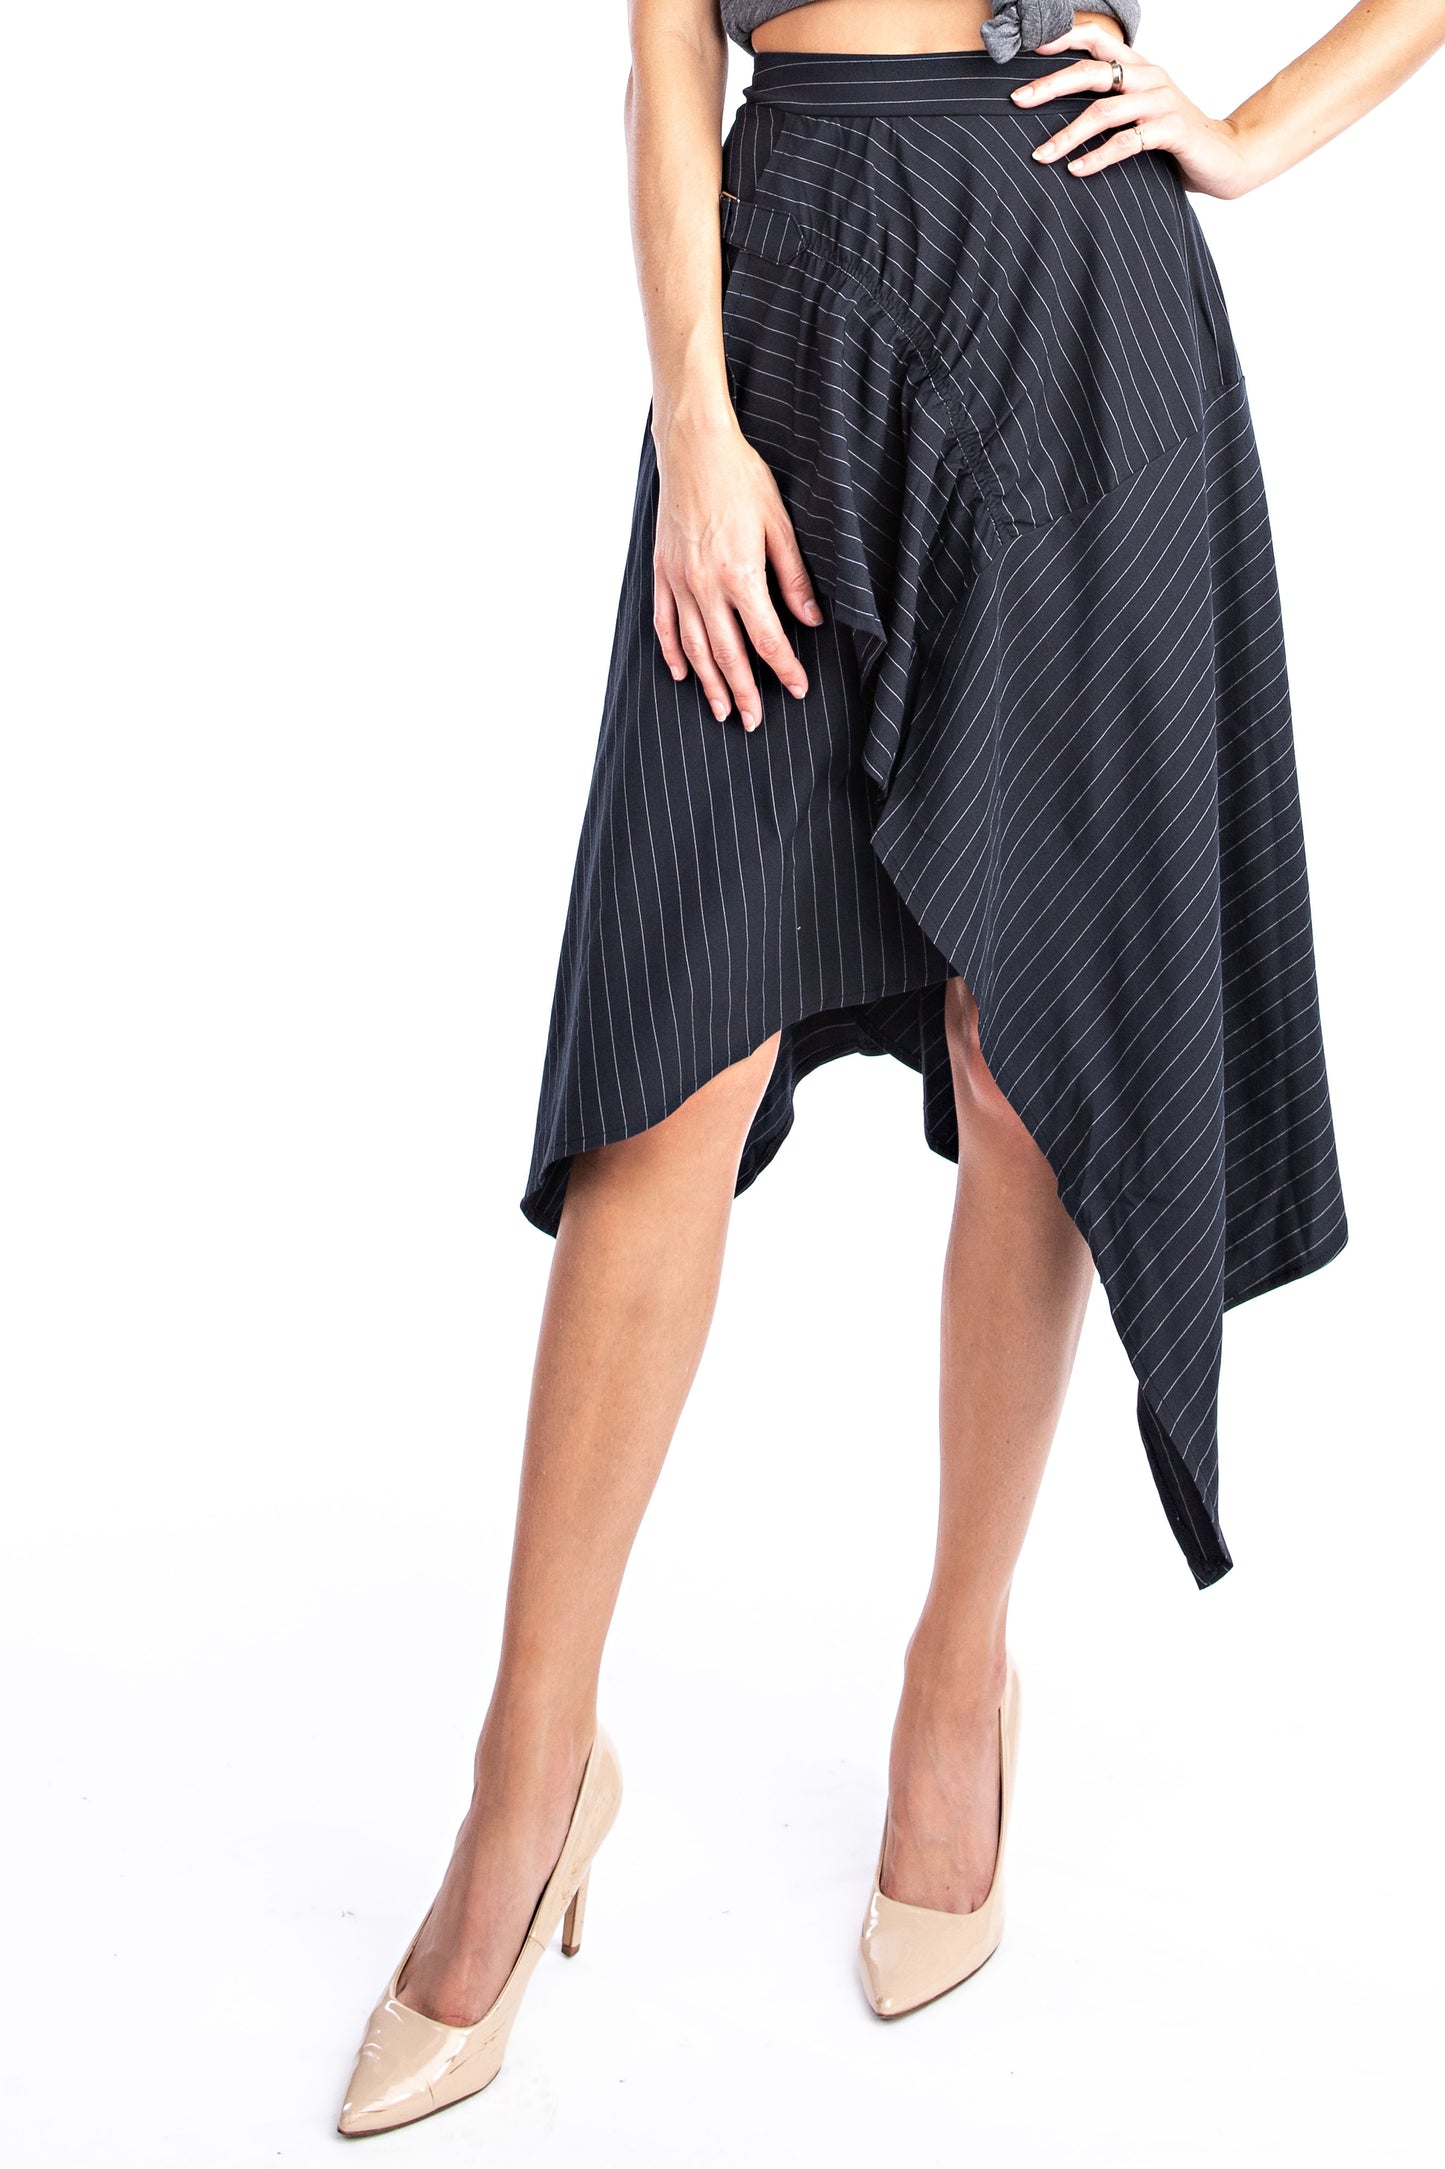 Onyx Pinstripe Hankerfief Skirt - Solitaire Fashions